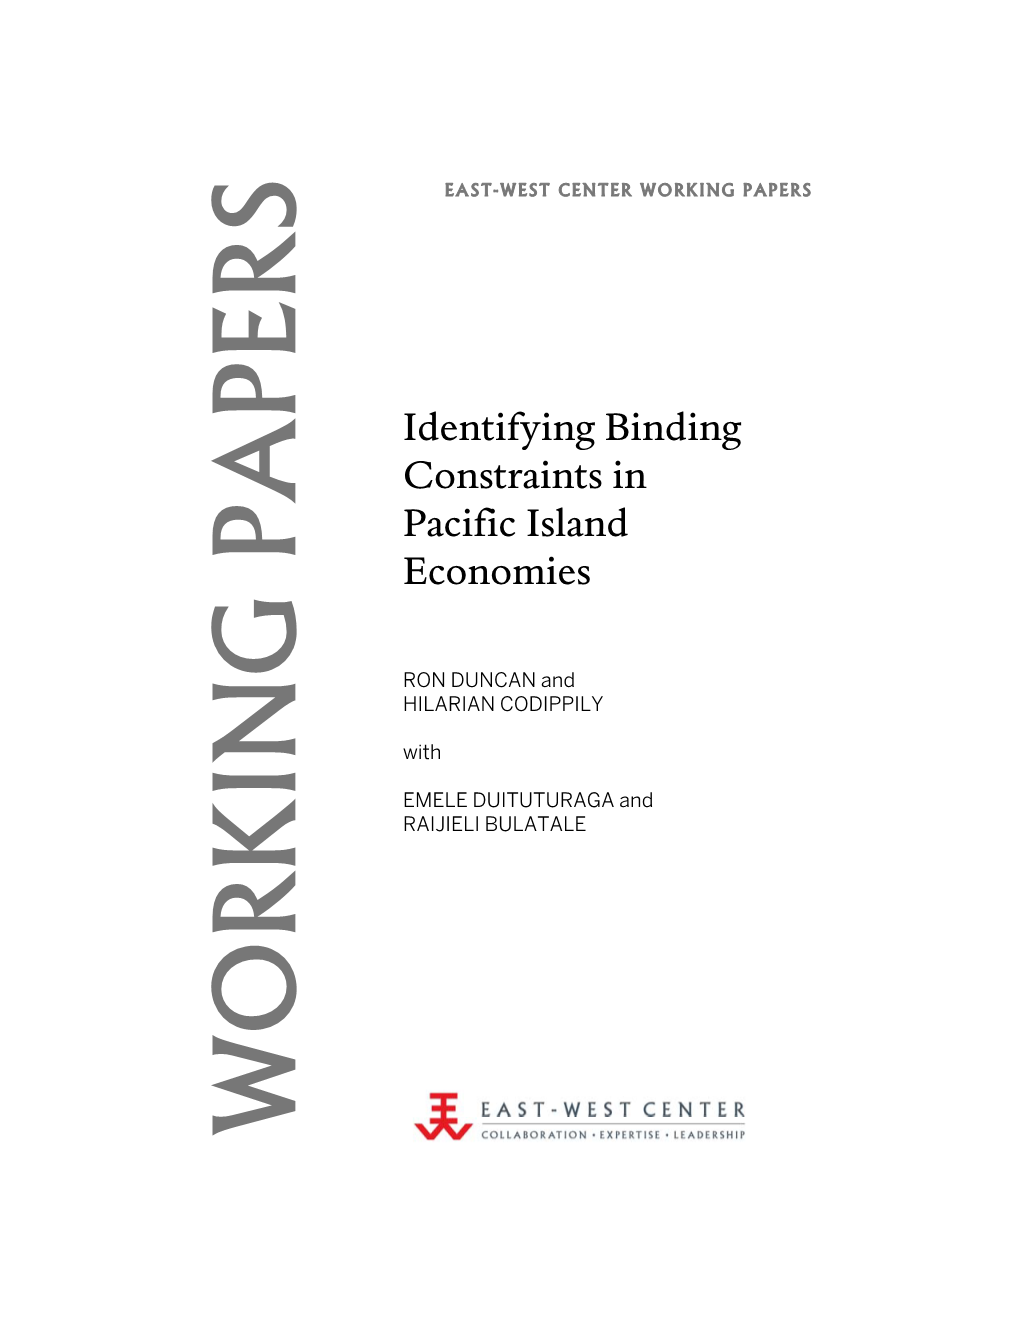 Identifying Binding Constraints in Pacific Island Economies